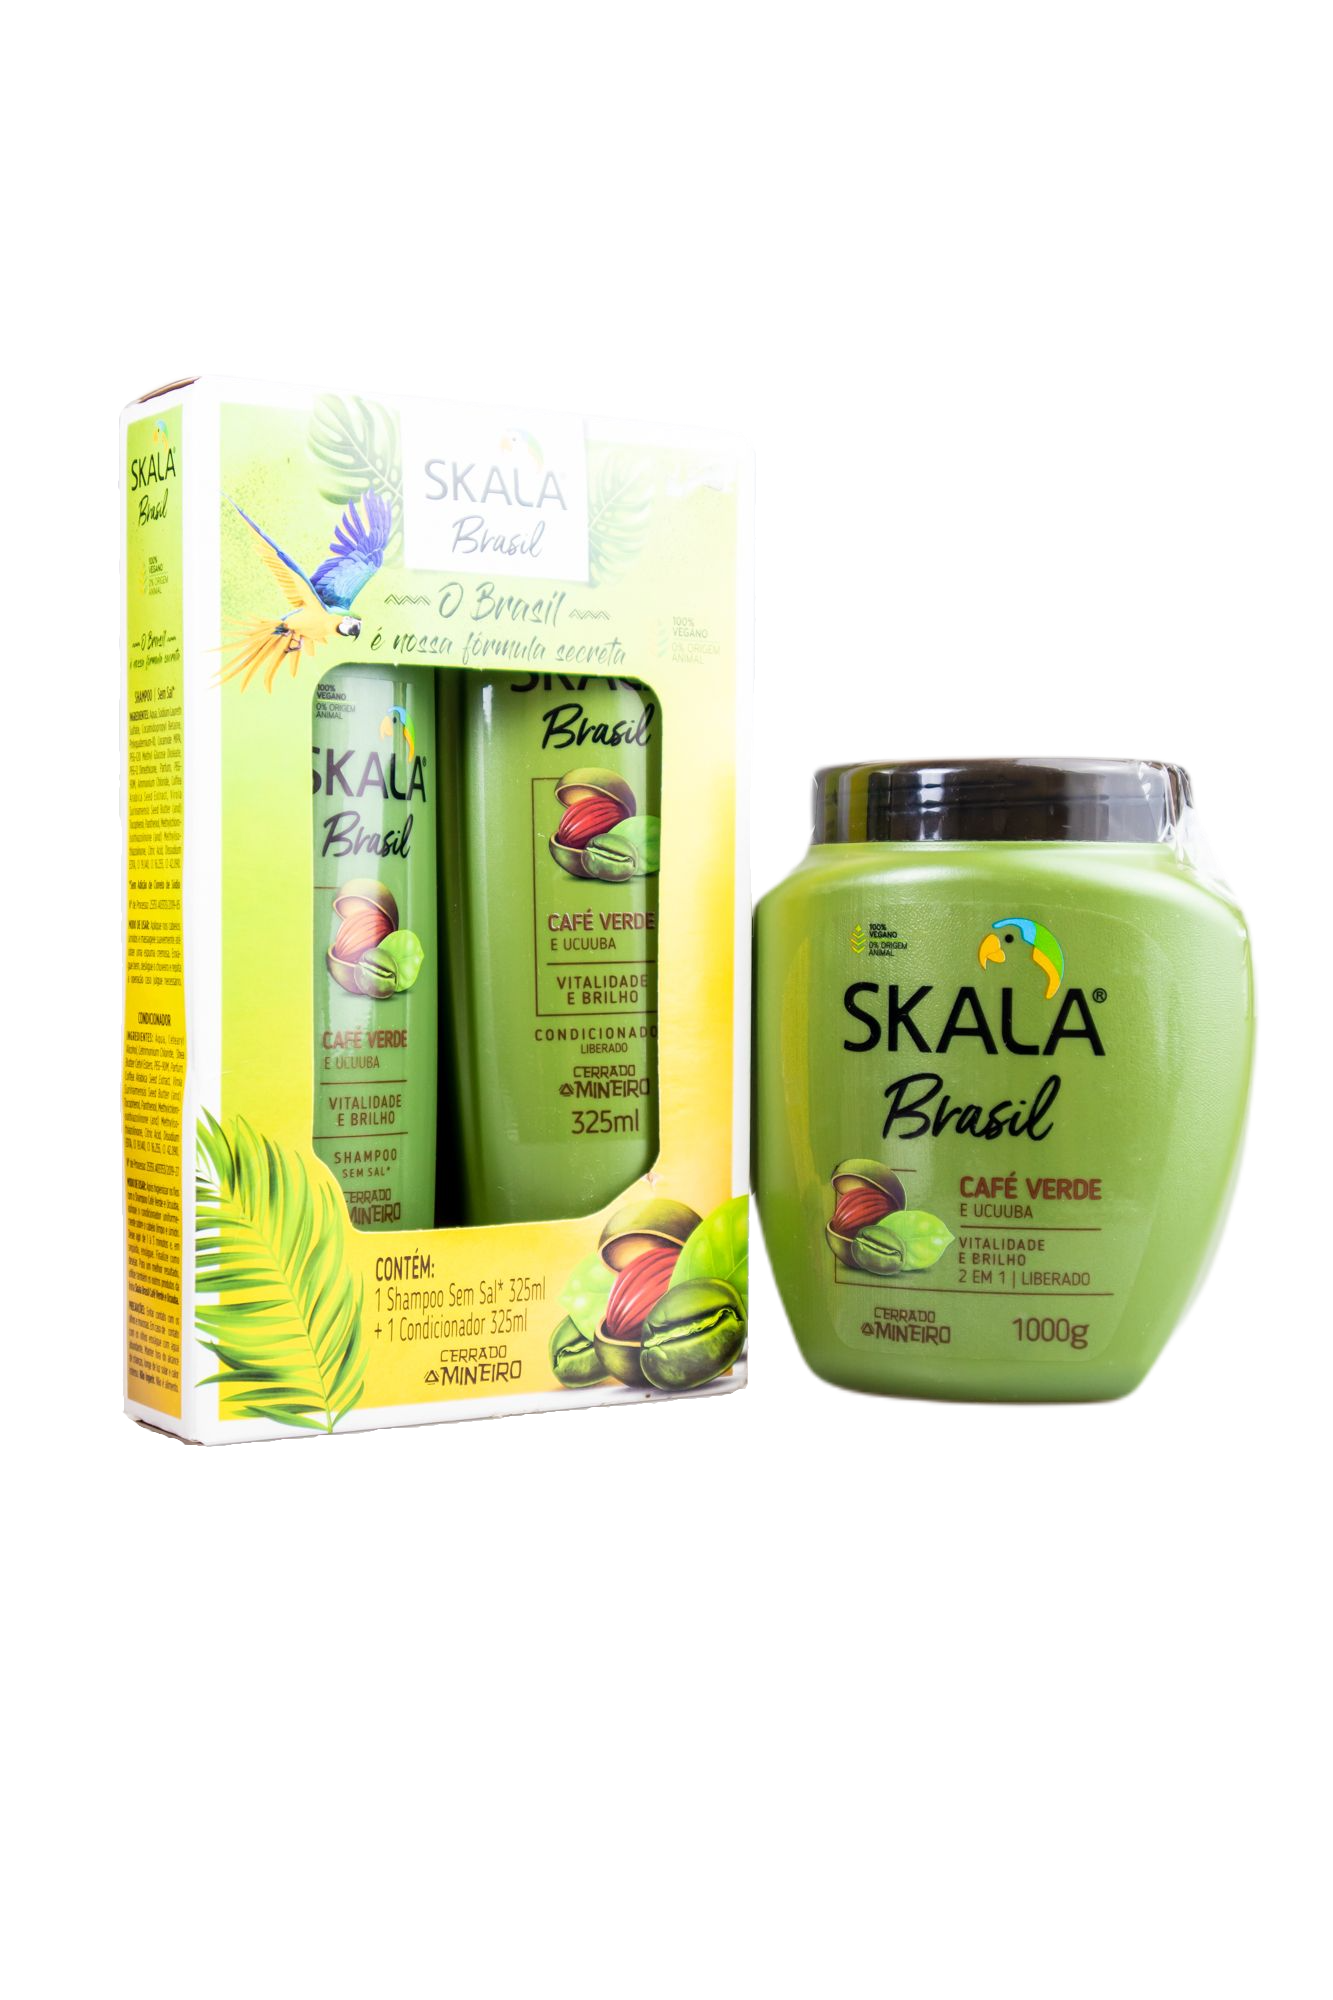 Skala Brasil Cafe Verde Green Coffee & Ucuuba Nutrition Vegan Treatmen